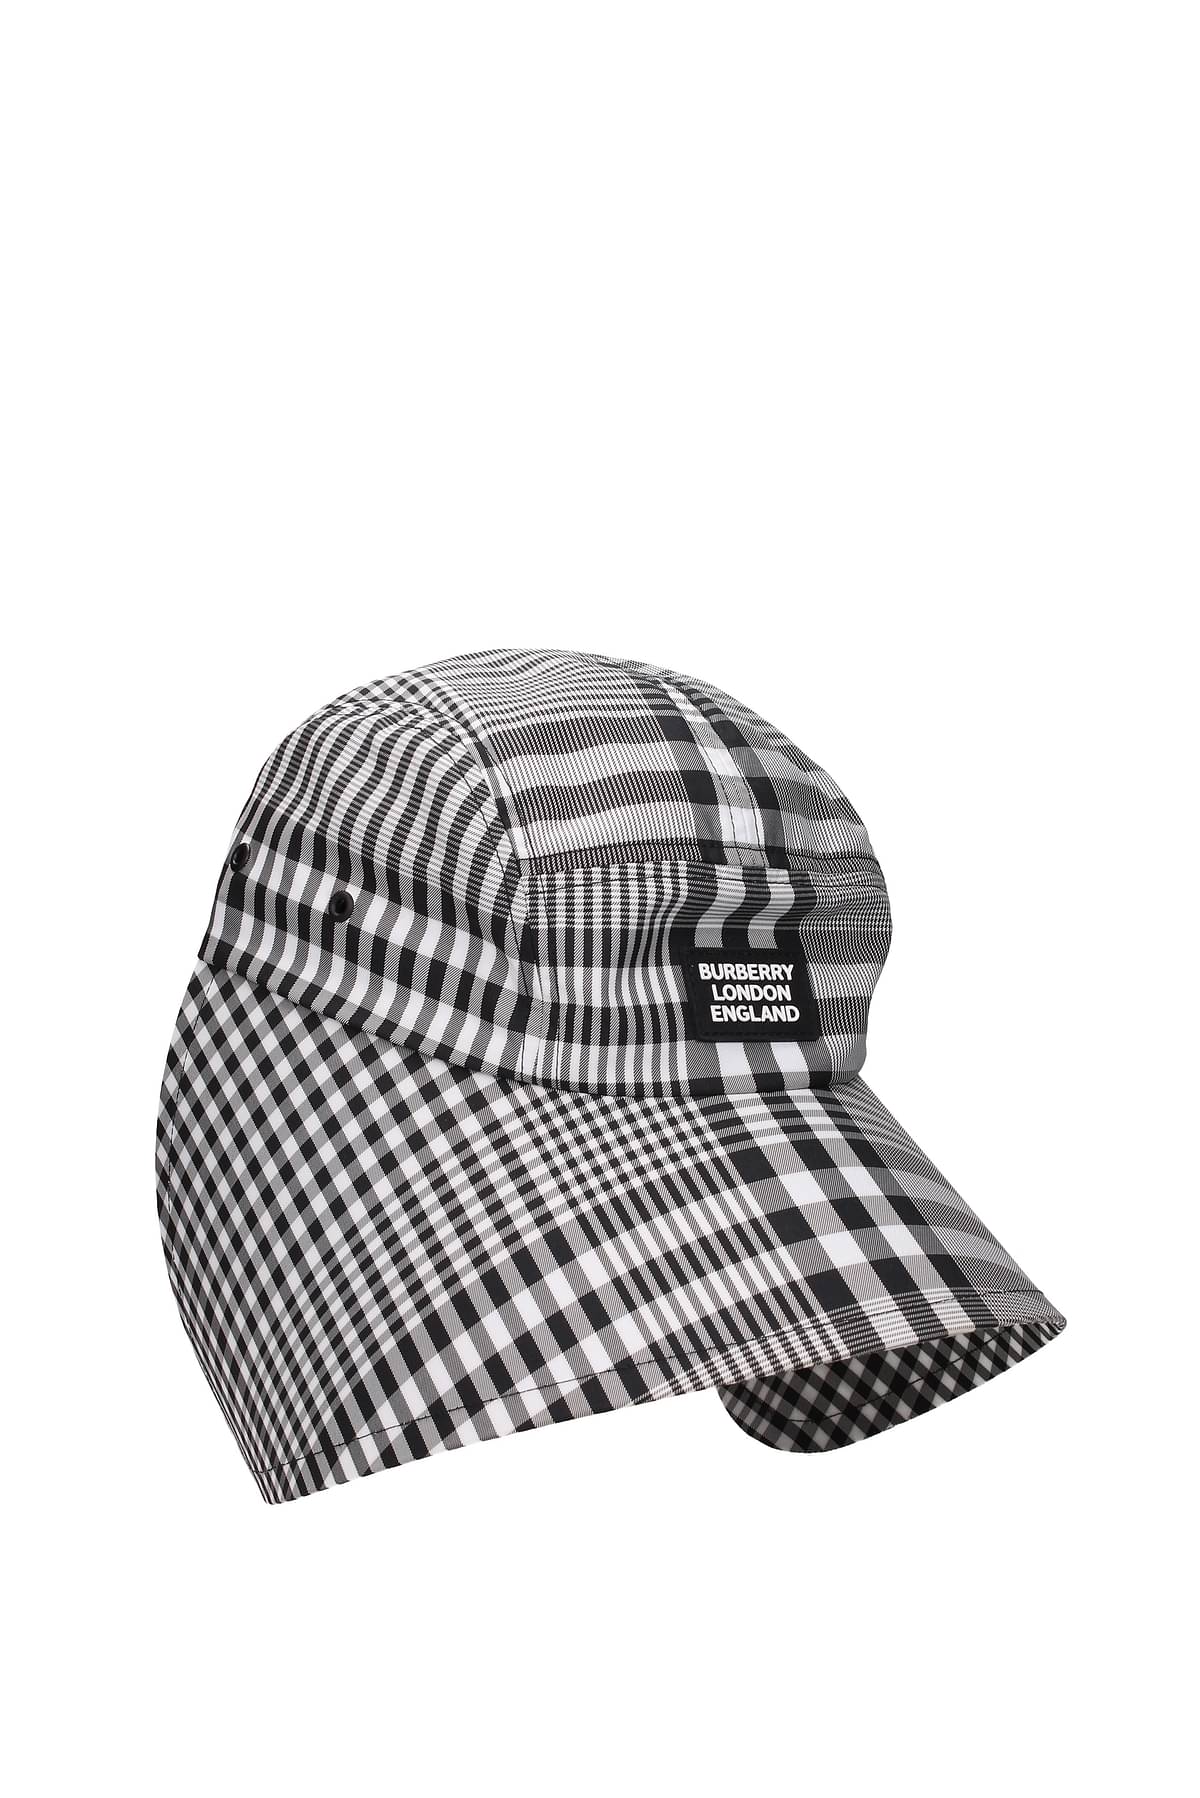 Burberry Hats Men 8028304 Polyester 294€